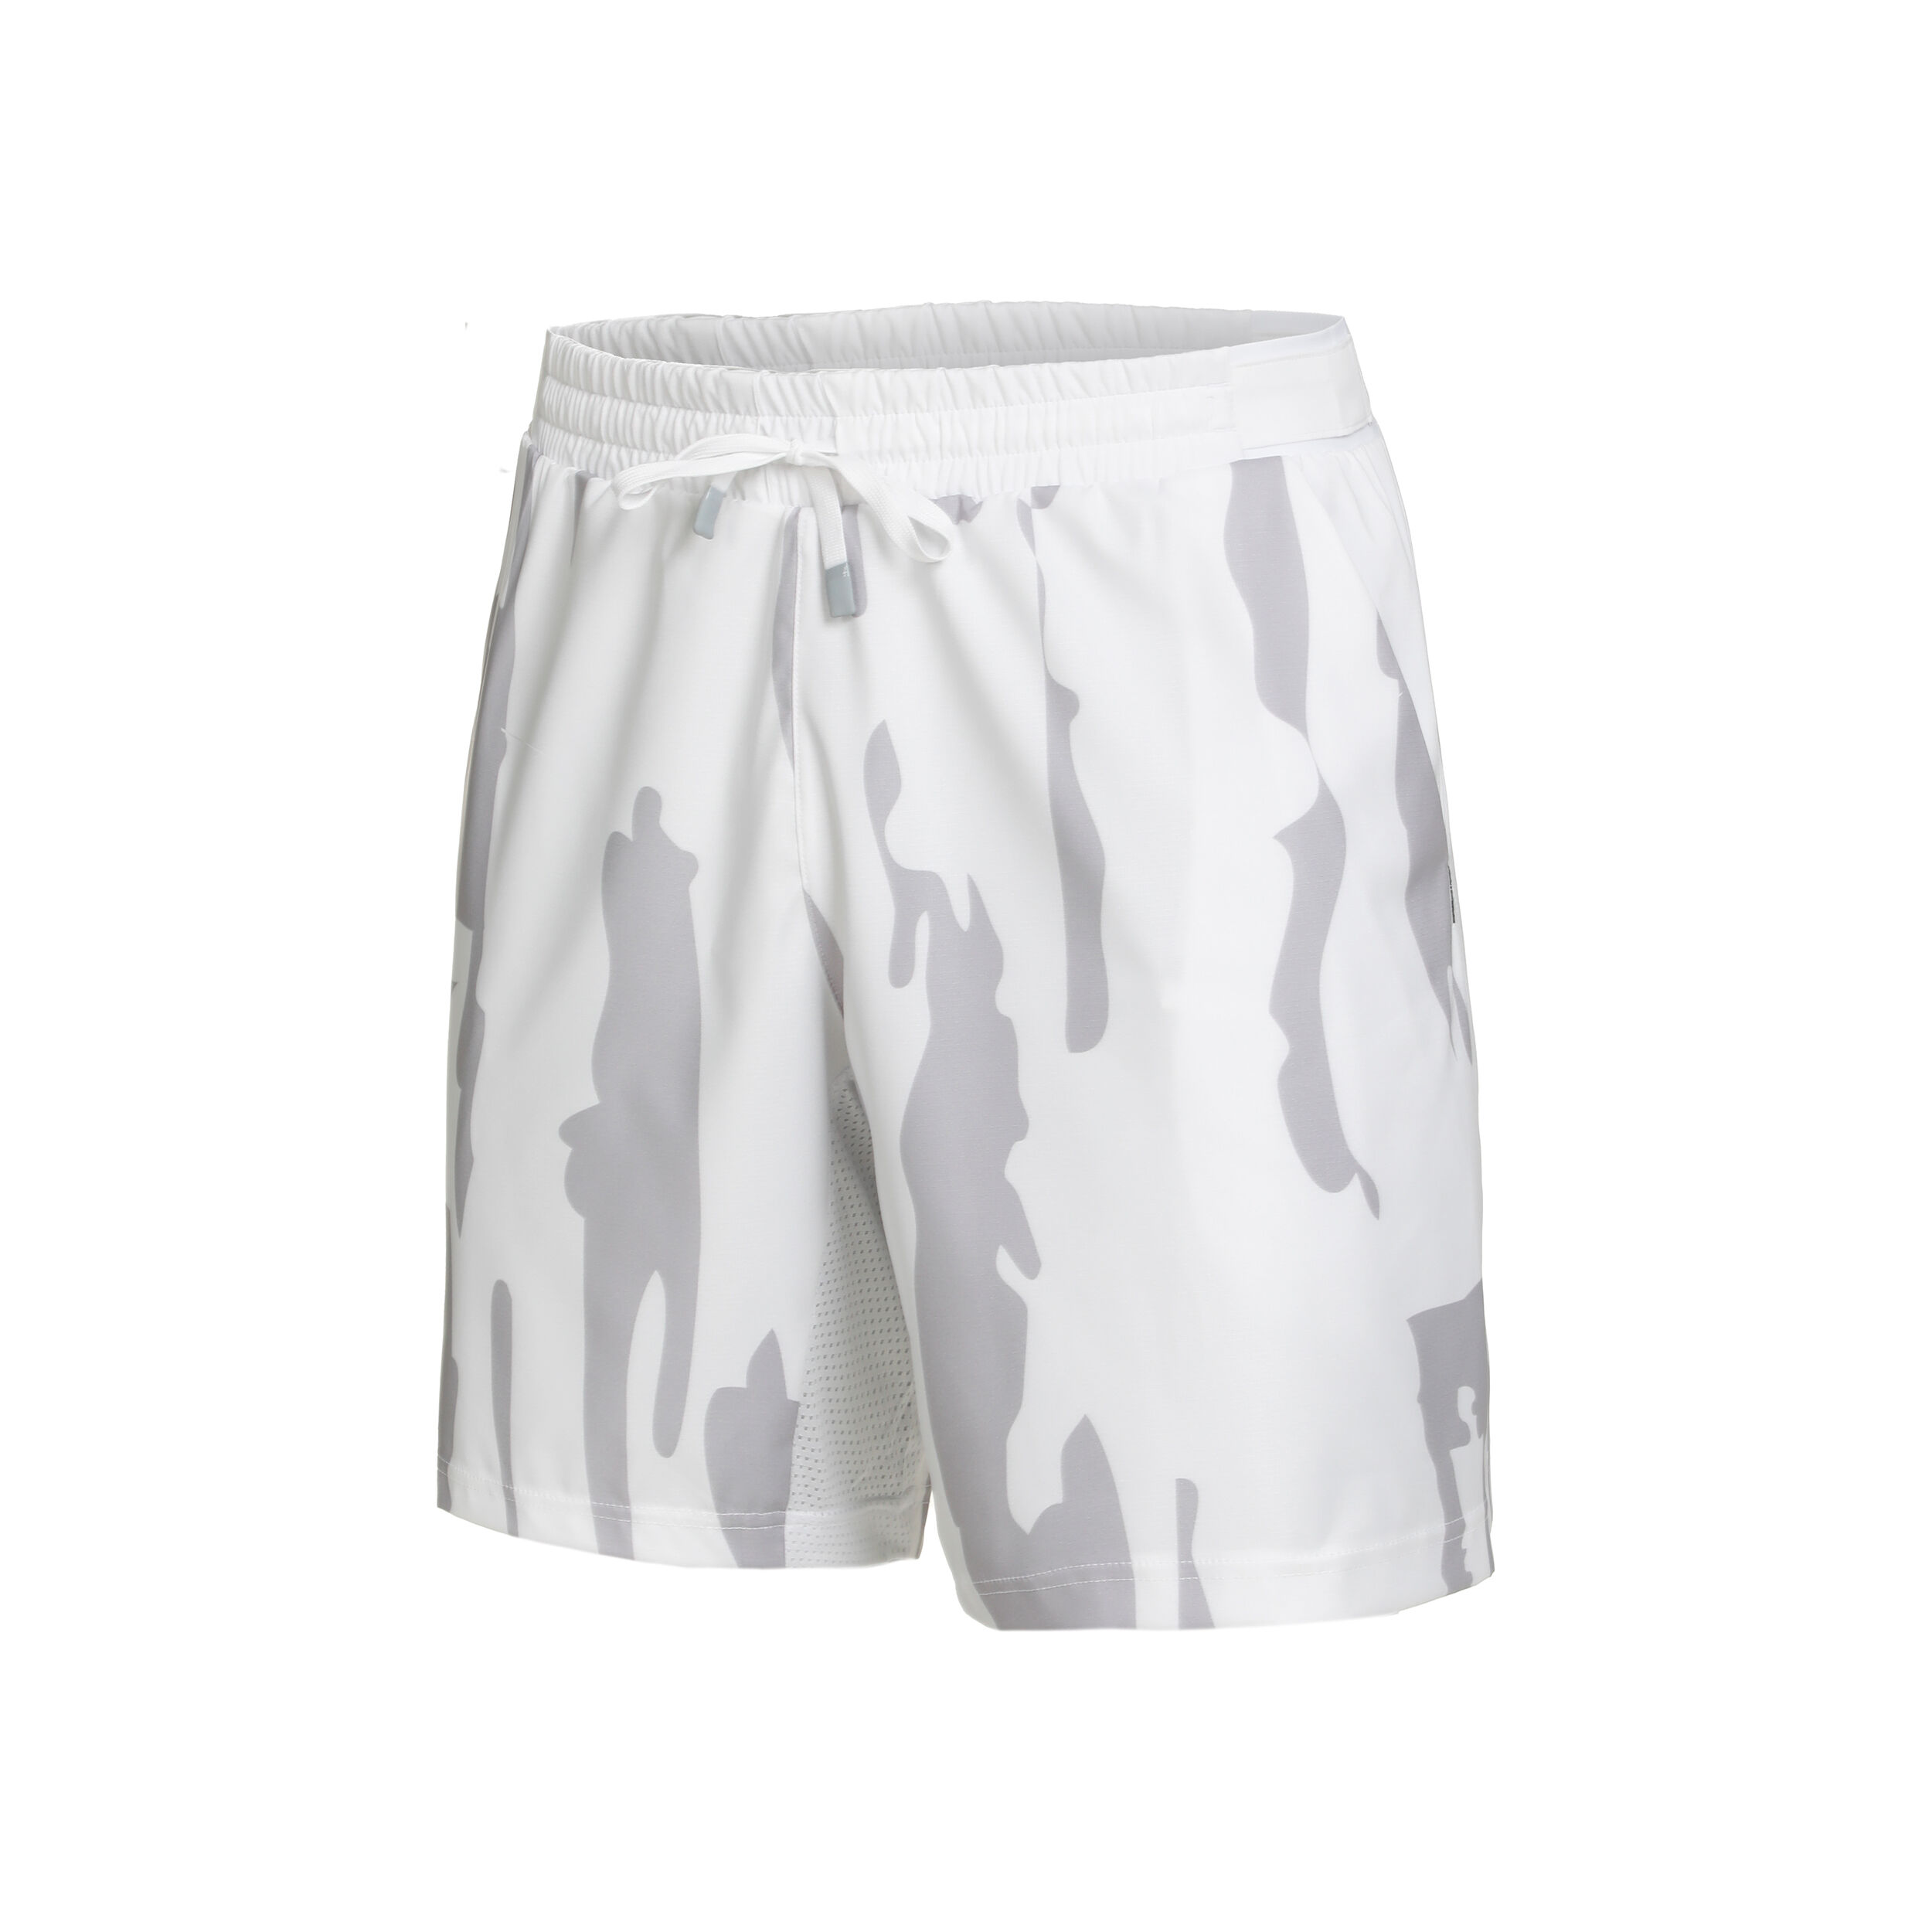 Buy Shorts online | Tennis-Point